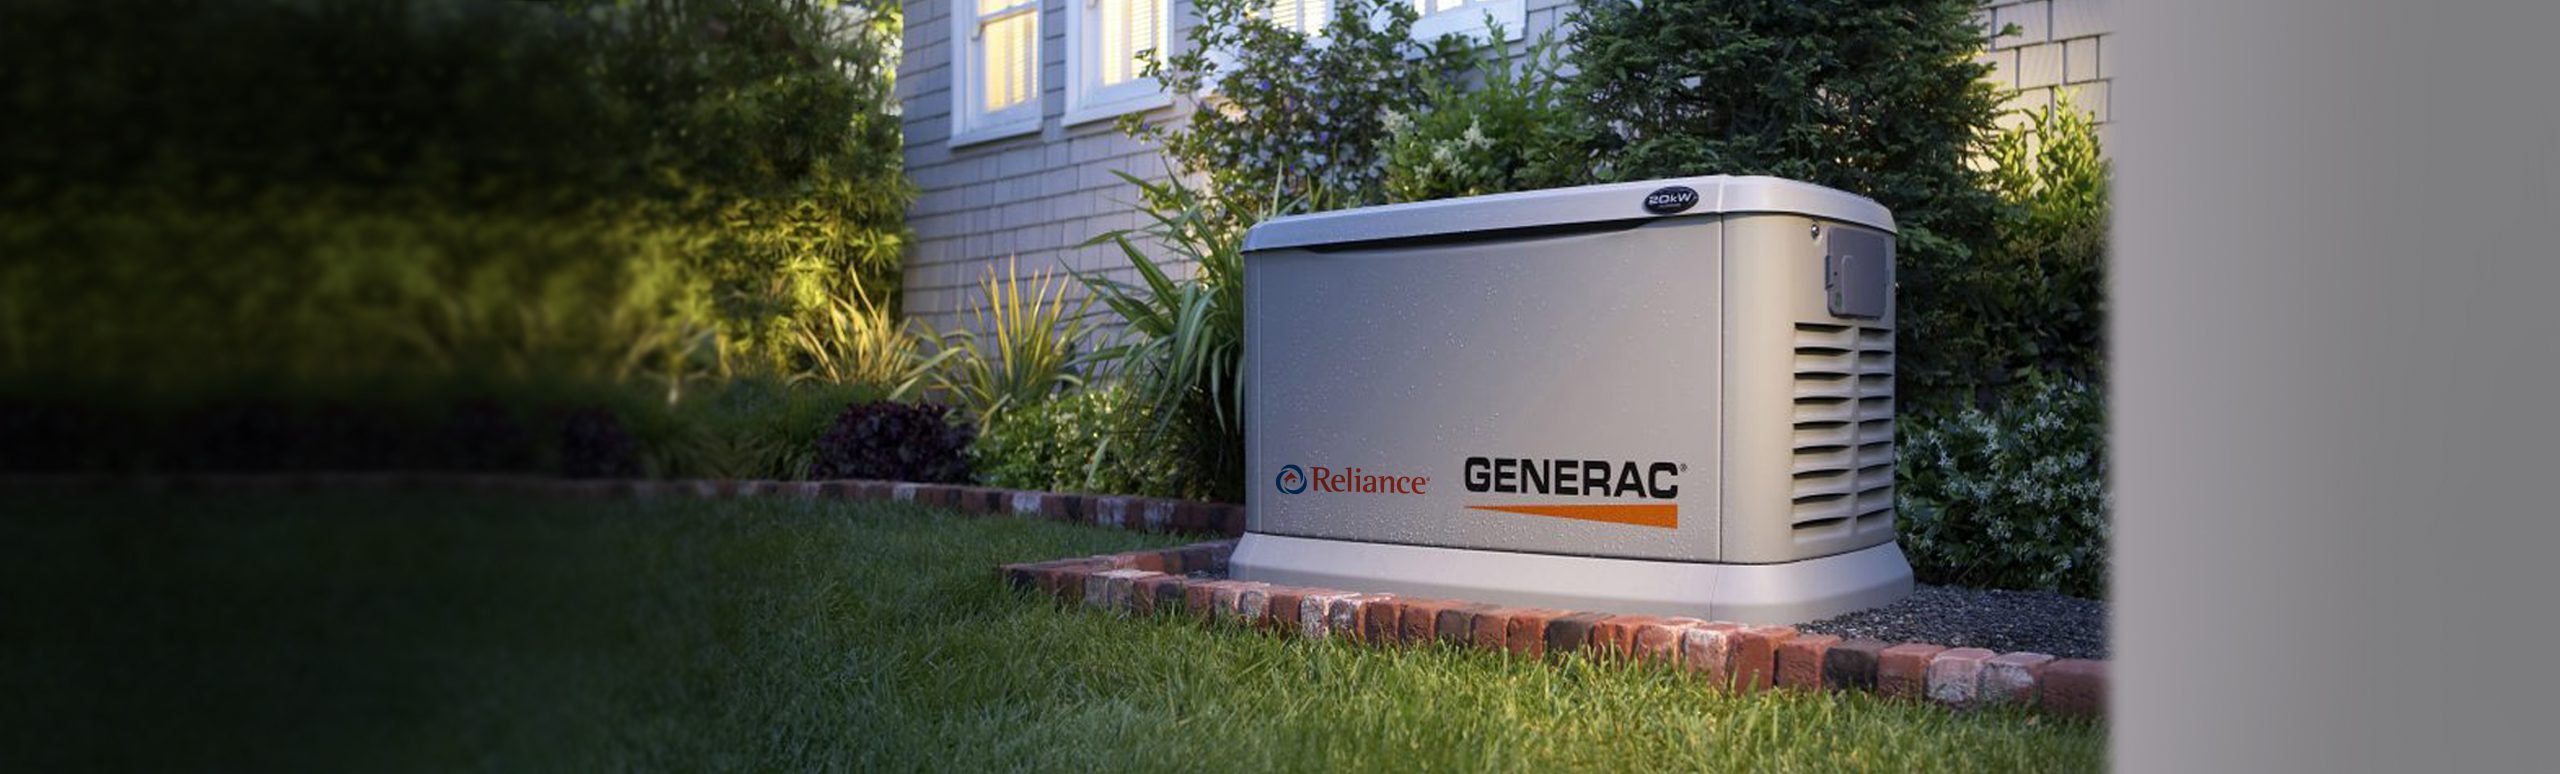 Generac Generator outside a home